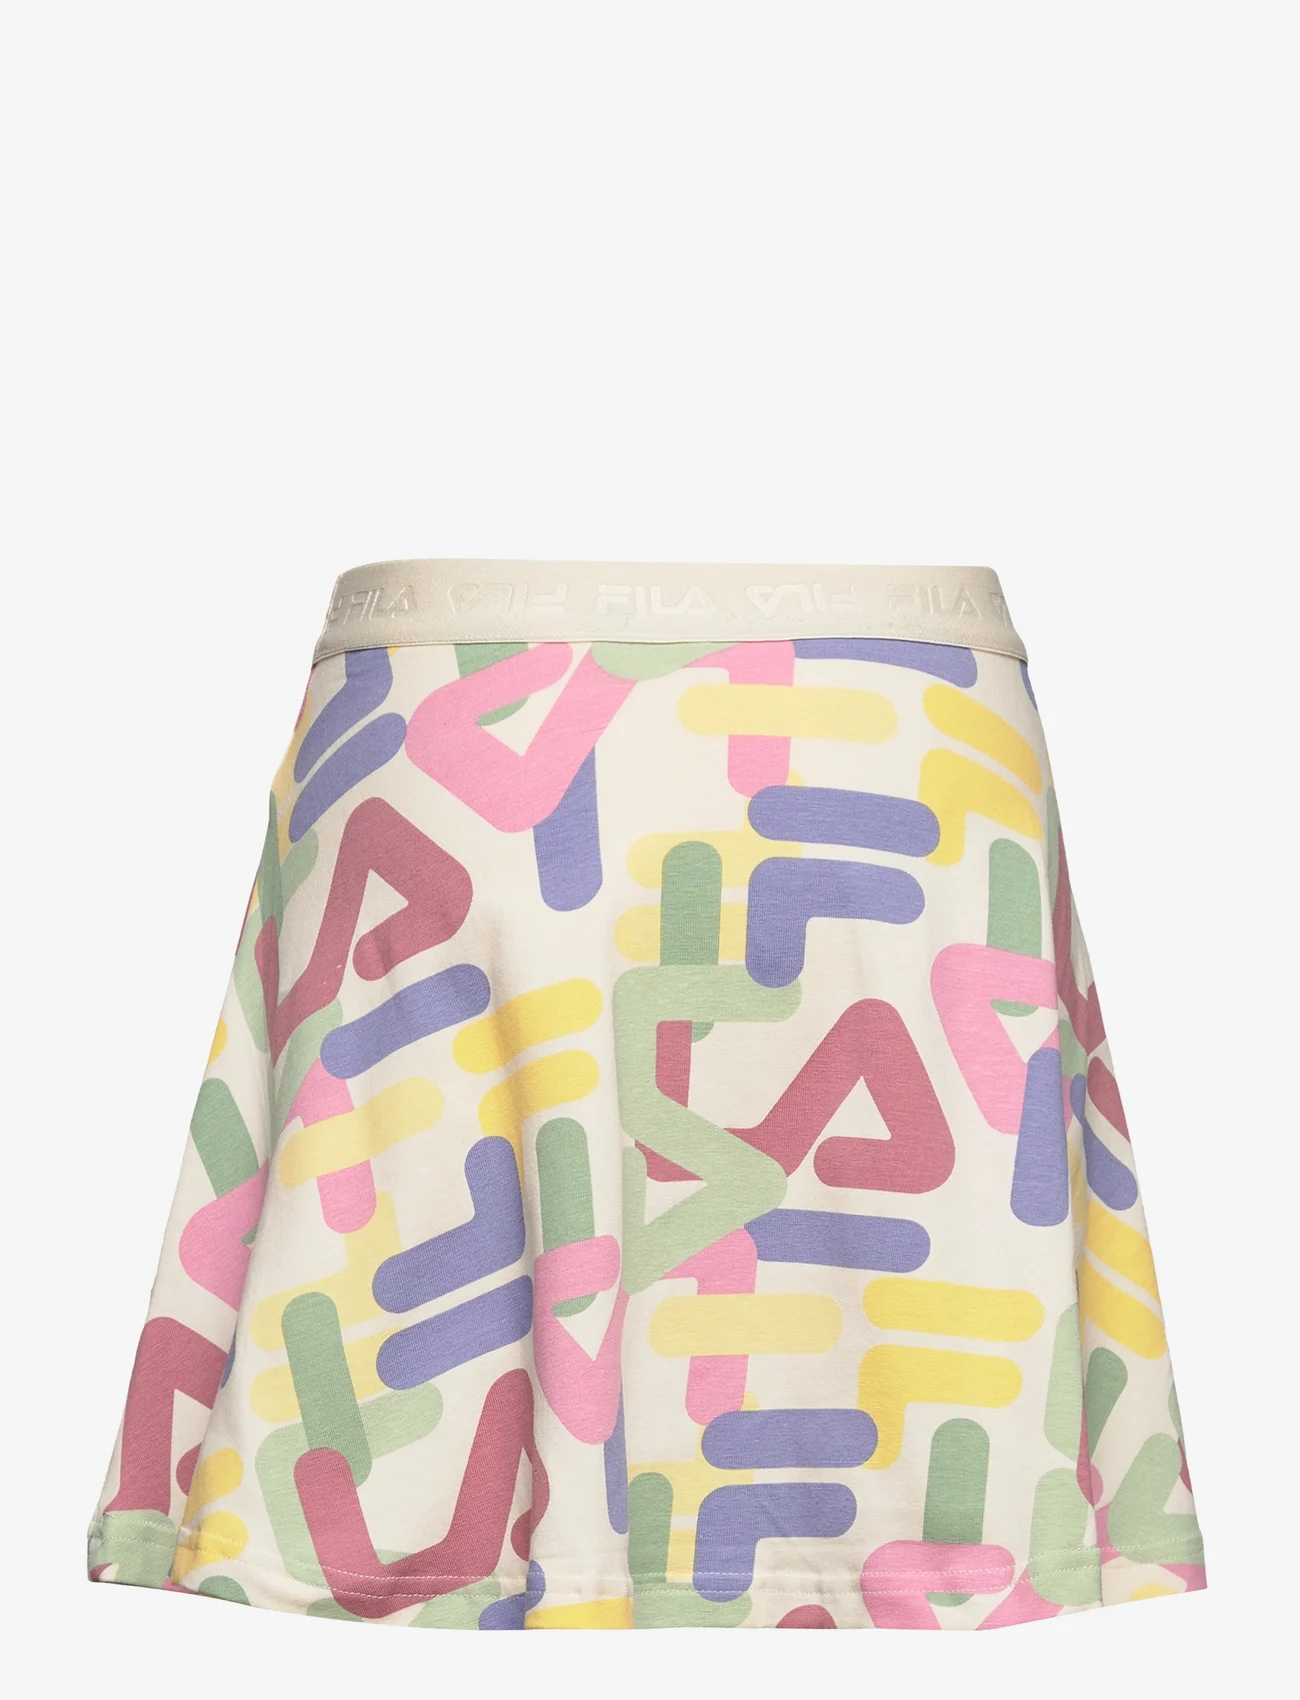 FILA - TUCHENBACH AOP skirt incl. shorts - korte nederdele - antique white letter aop - 1